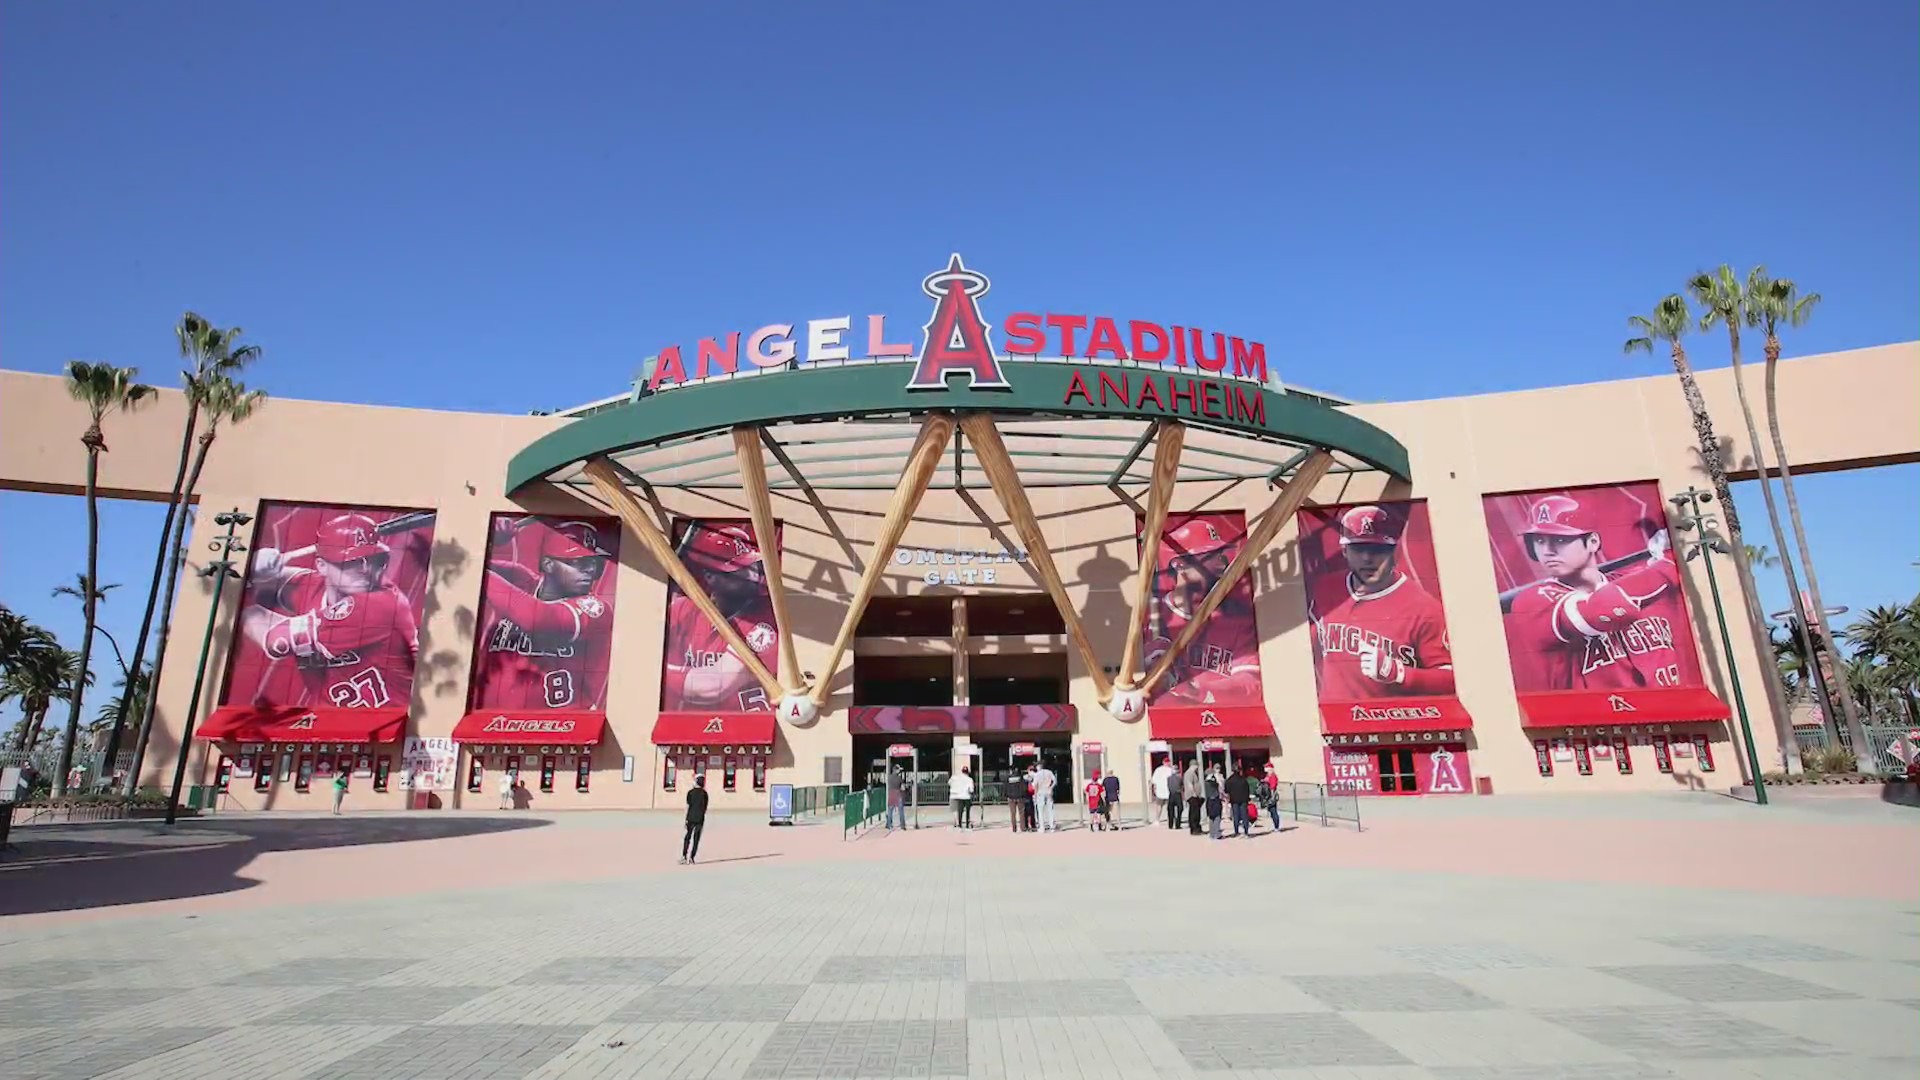 The Los Angeles Angels Stadium in Anaheim, California. (KTLA)